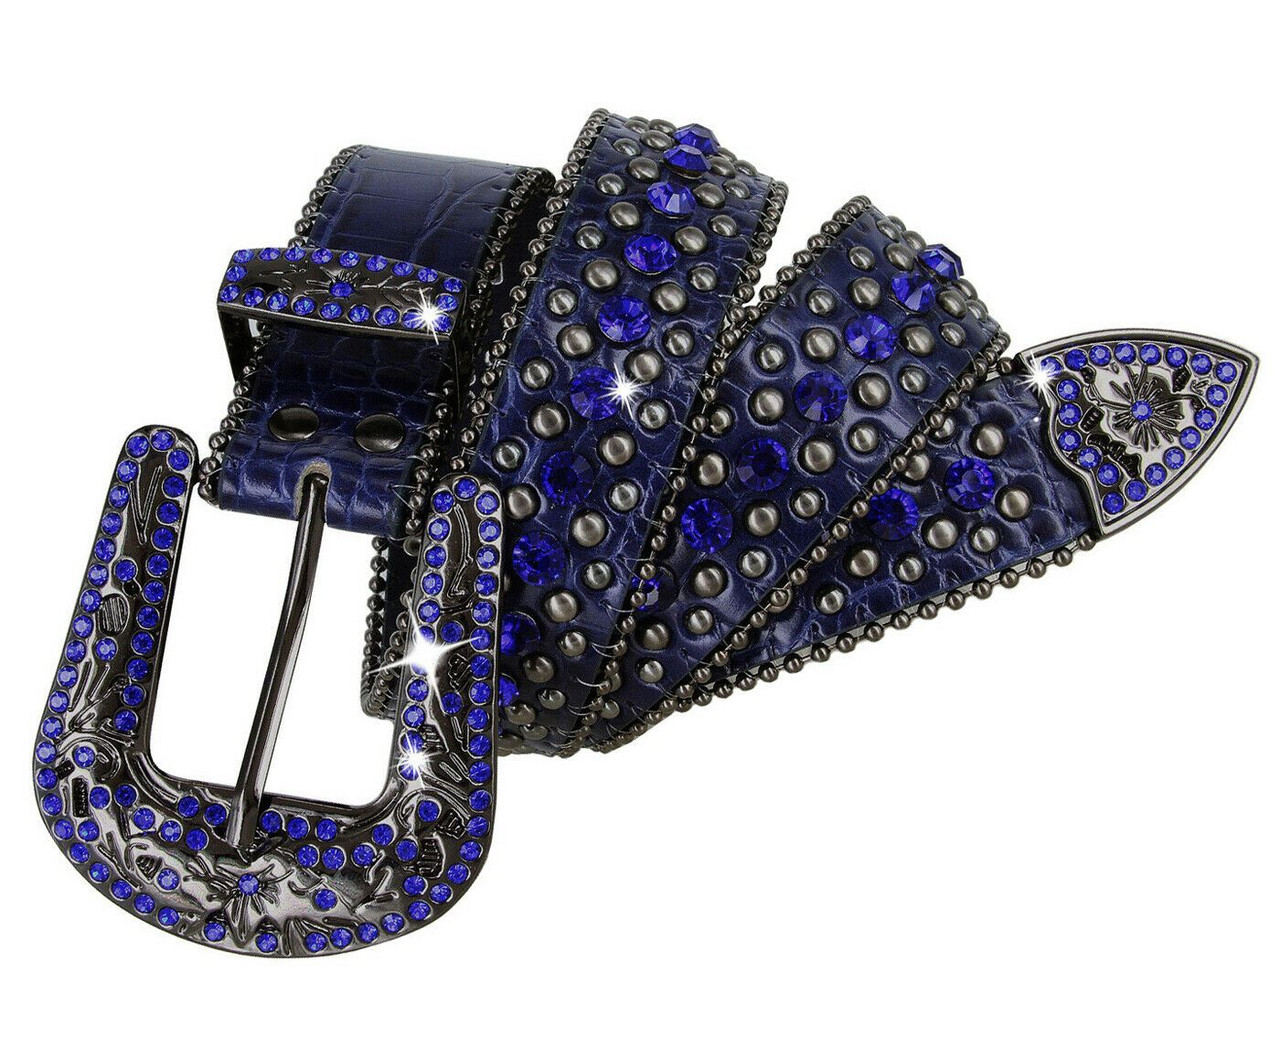 Vintage Rhinestone Belt Western Diamond Embellished Belt Buckle Belt Jeans  Black Blue 48 inch